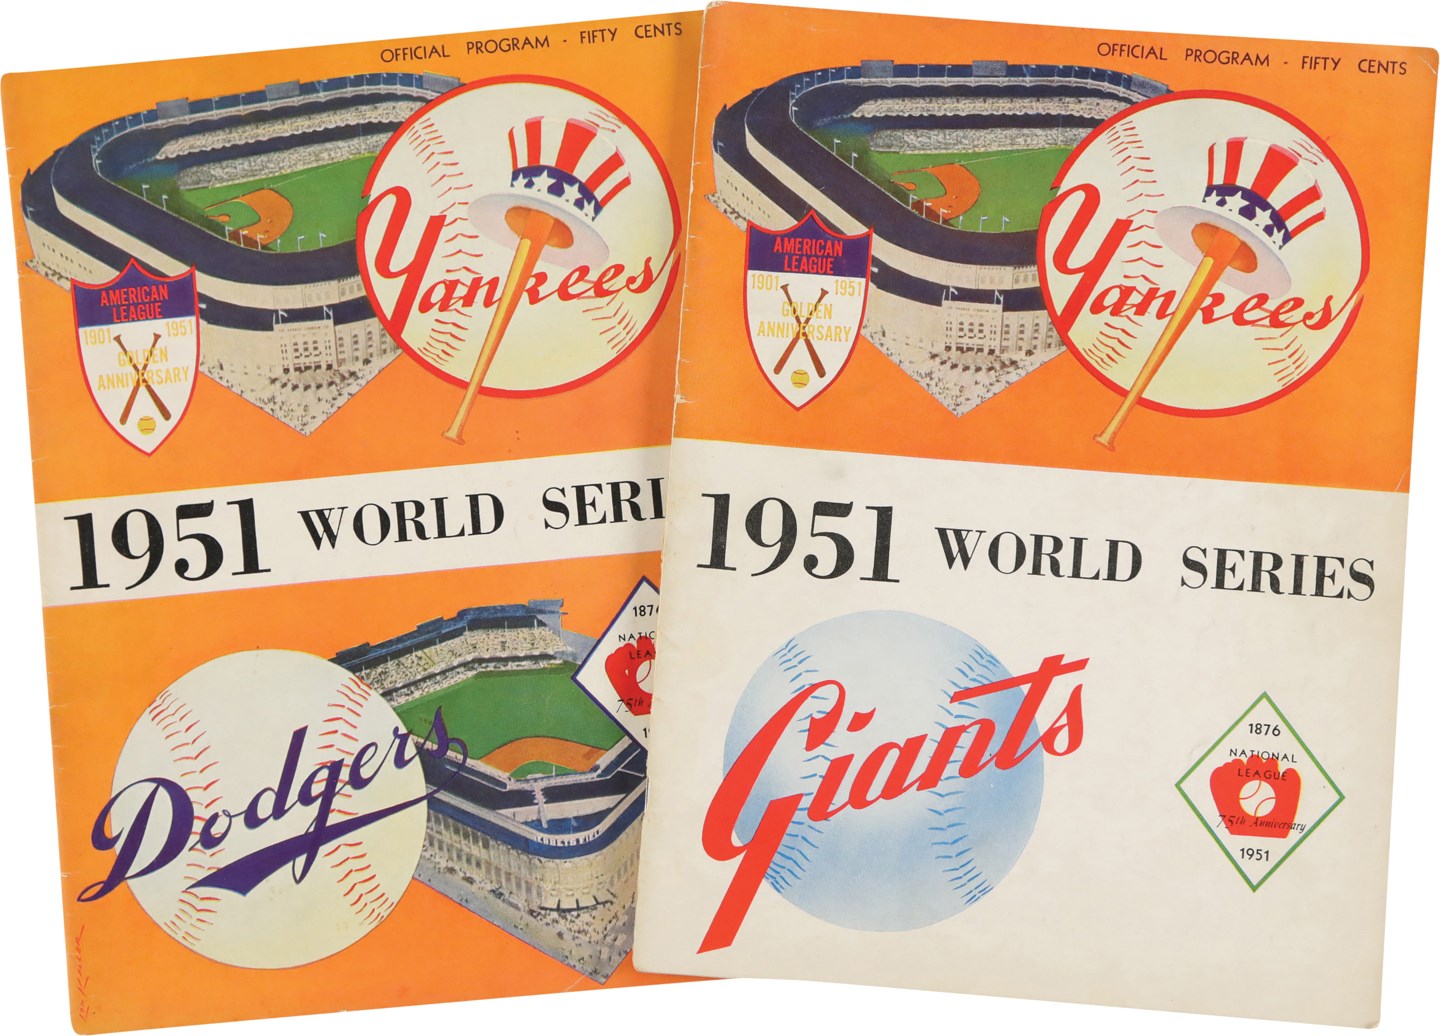 - 1951 World Series Program Pair Including Scarce "Phantom" Program vs. Dodgers